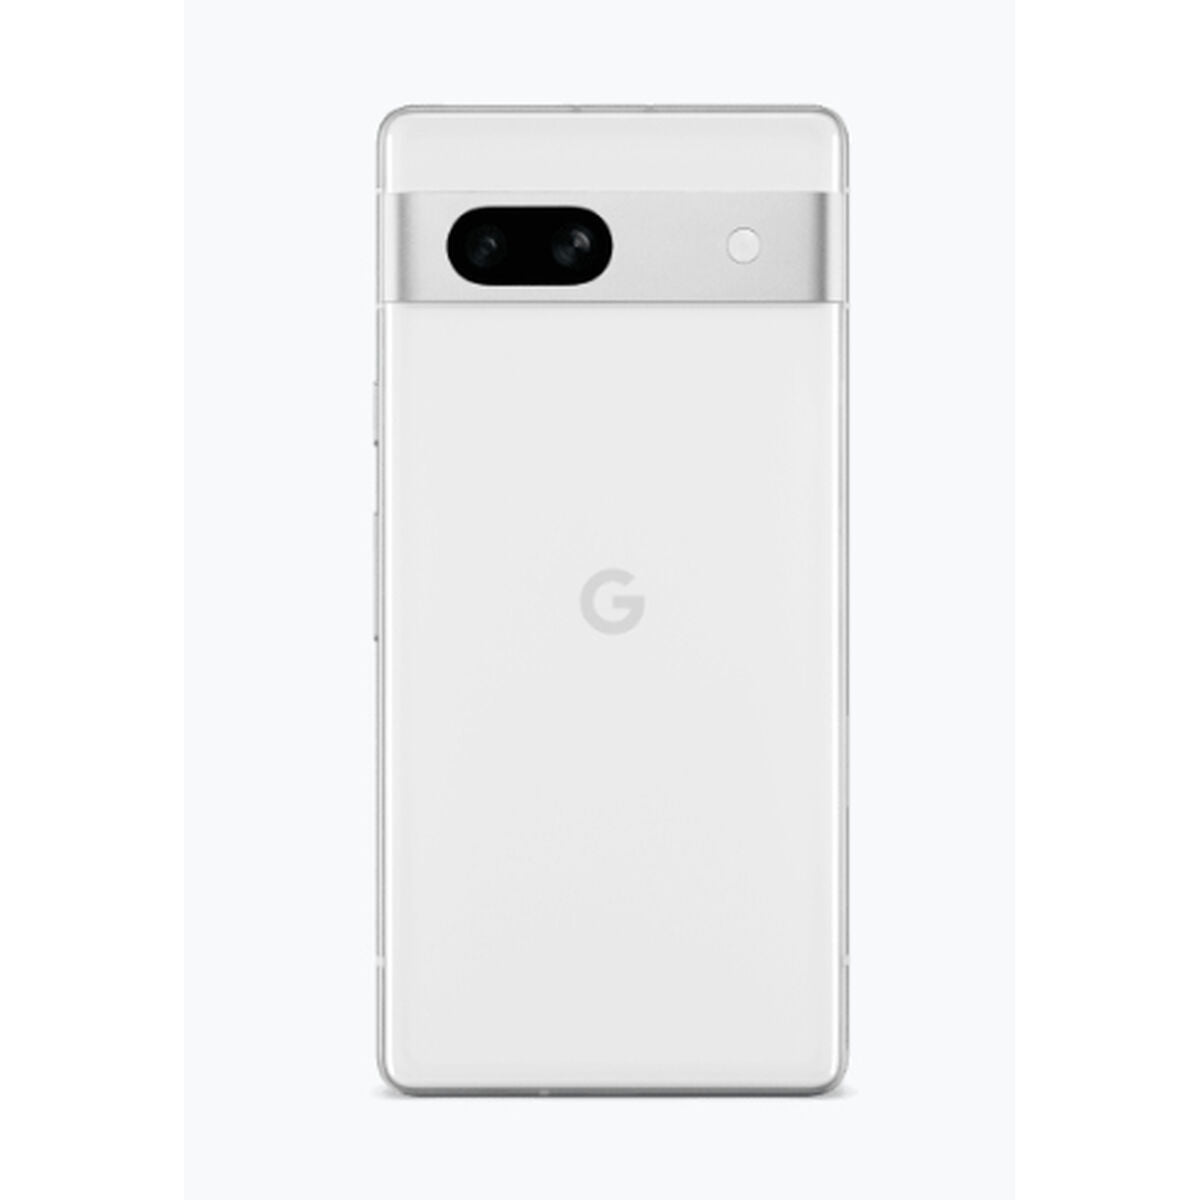 Smartphone Google Pixel 7a White 8 GB RAM 6,1" 128 GB